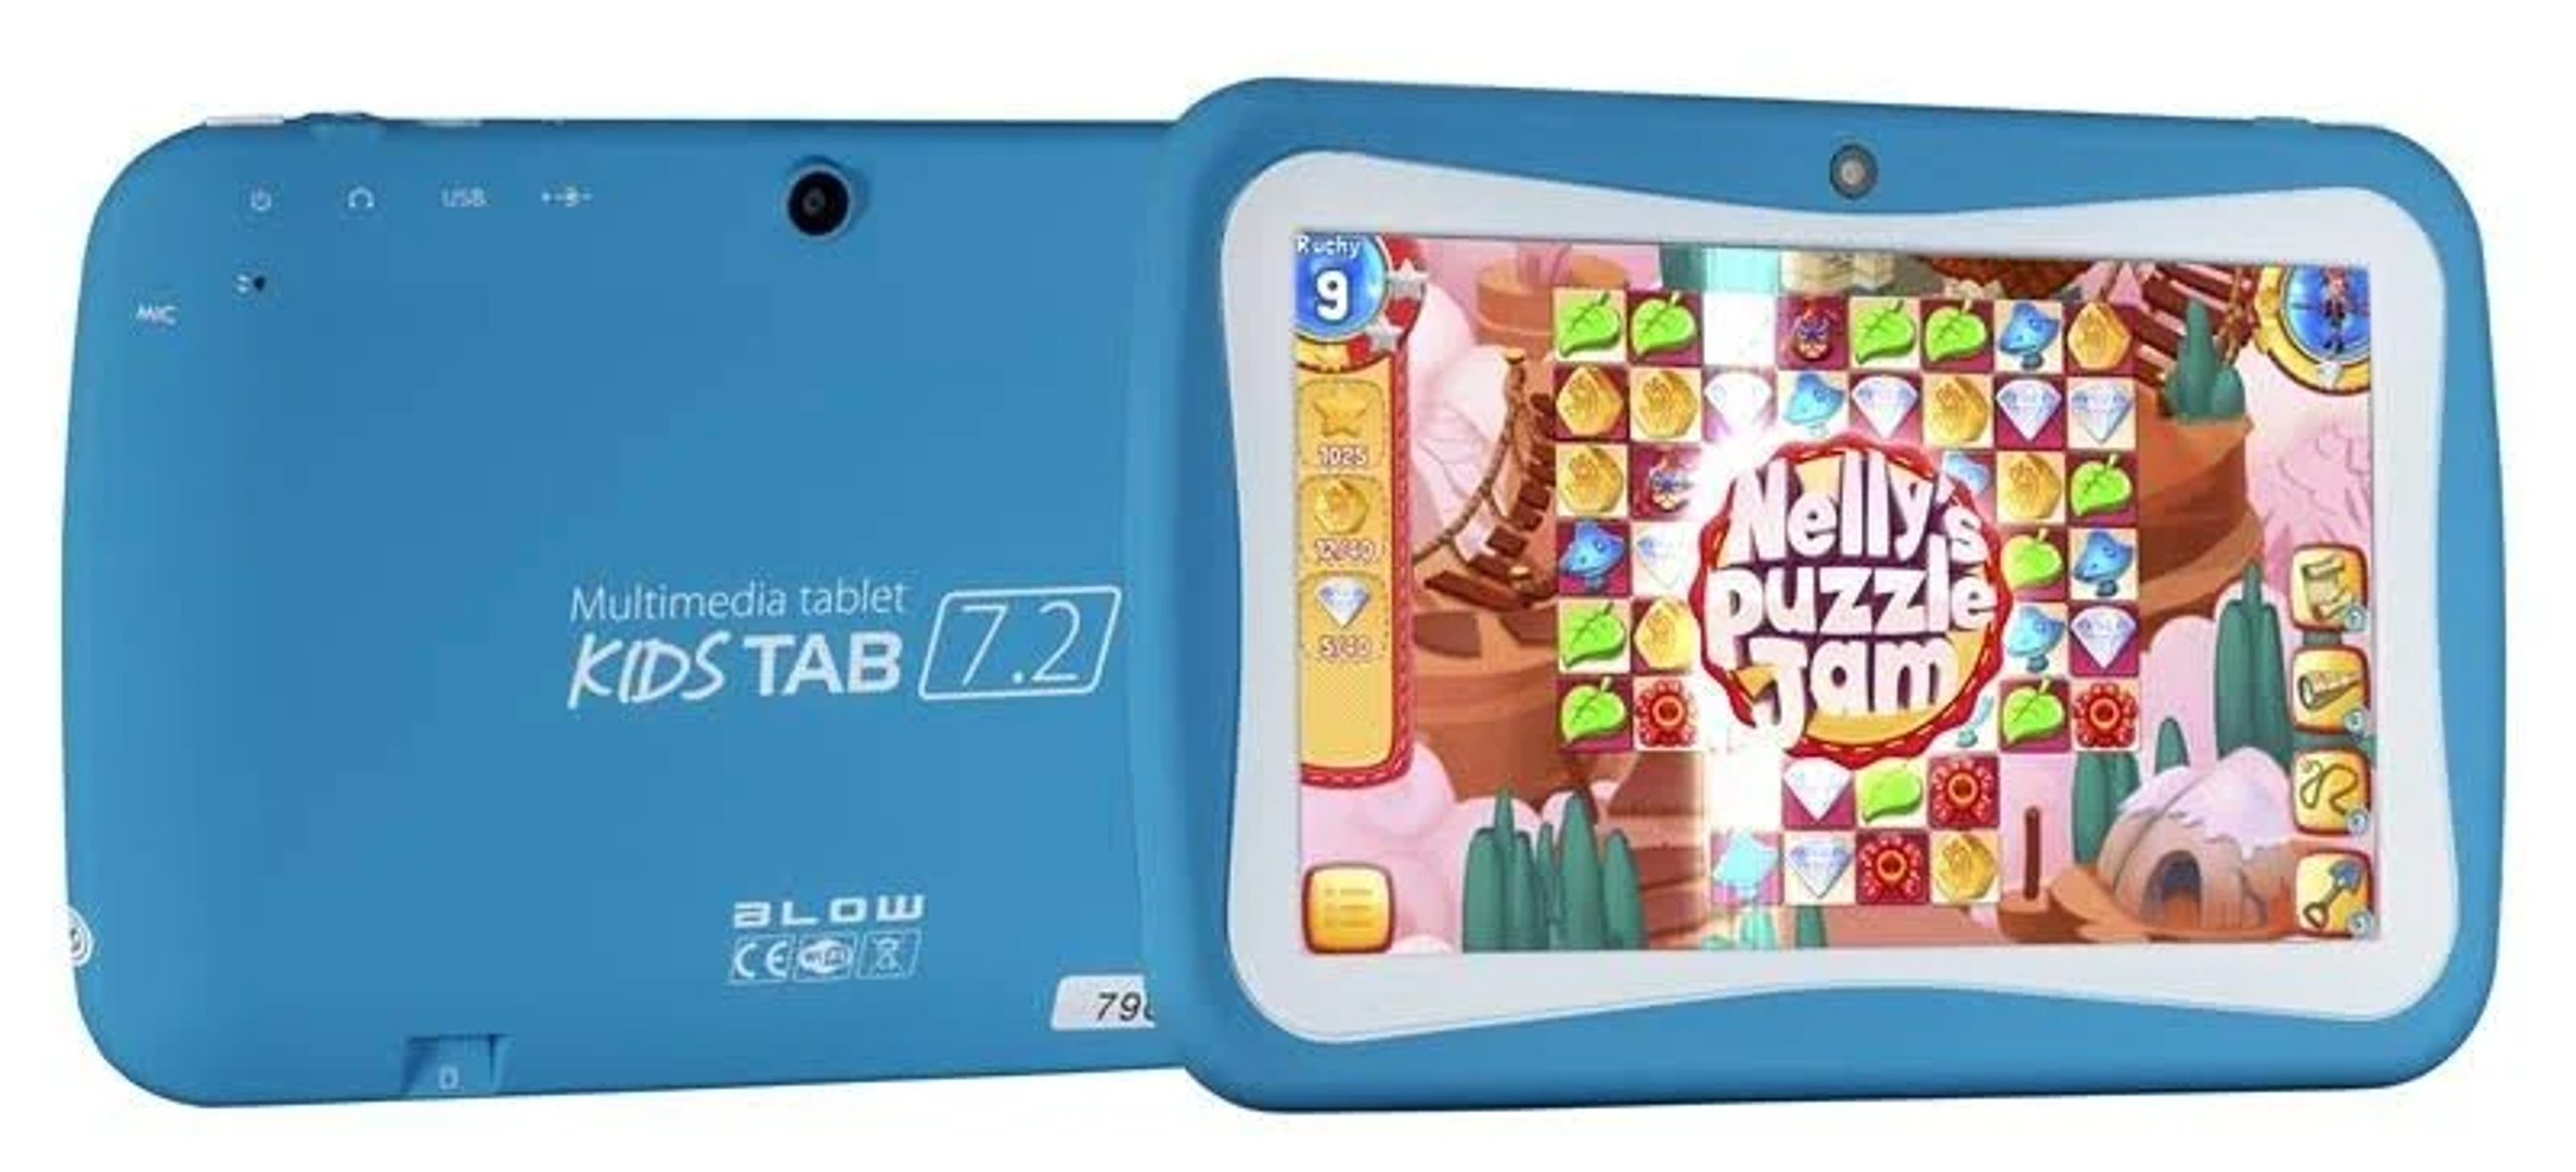 GB, KidsTab 7 Tablet, 2/32 GB, 7 Blau 16 Zoll, BLOW